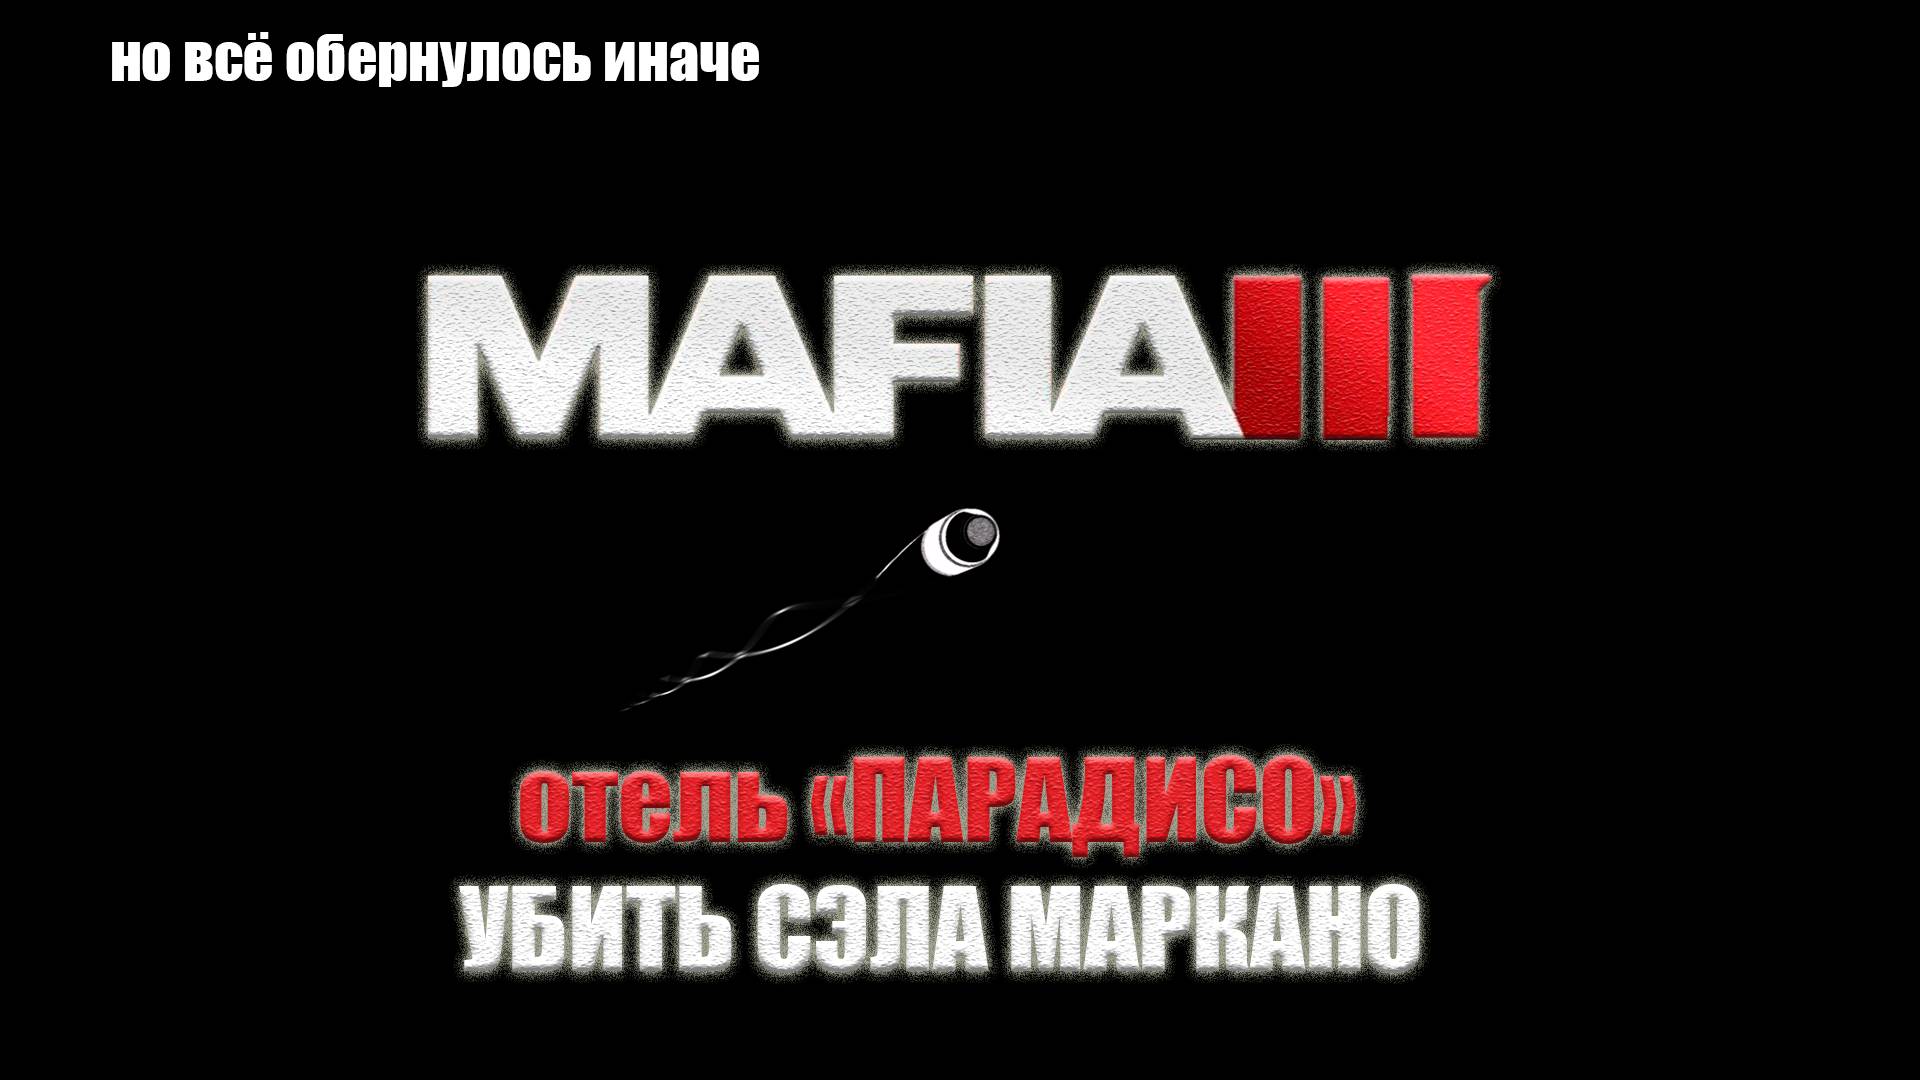 Mafia III - ОТЕЛЬ "ПАРАДИСО"